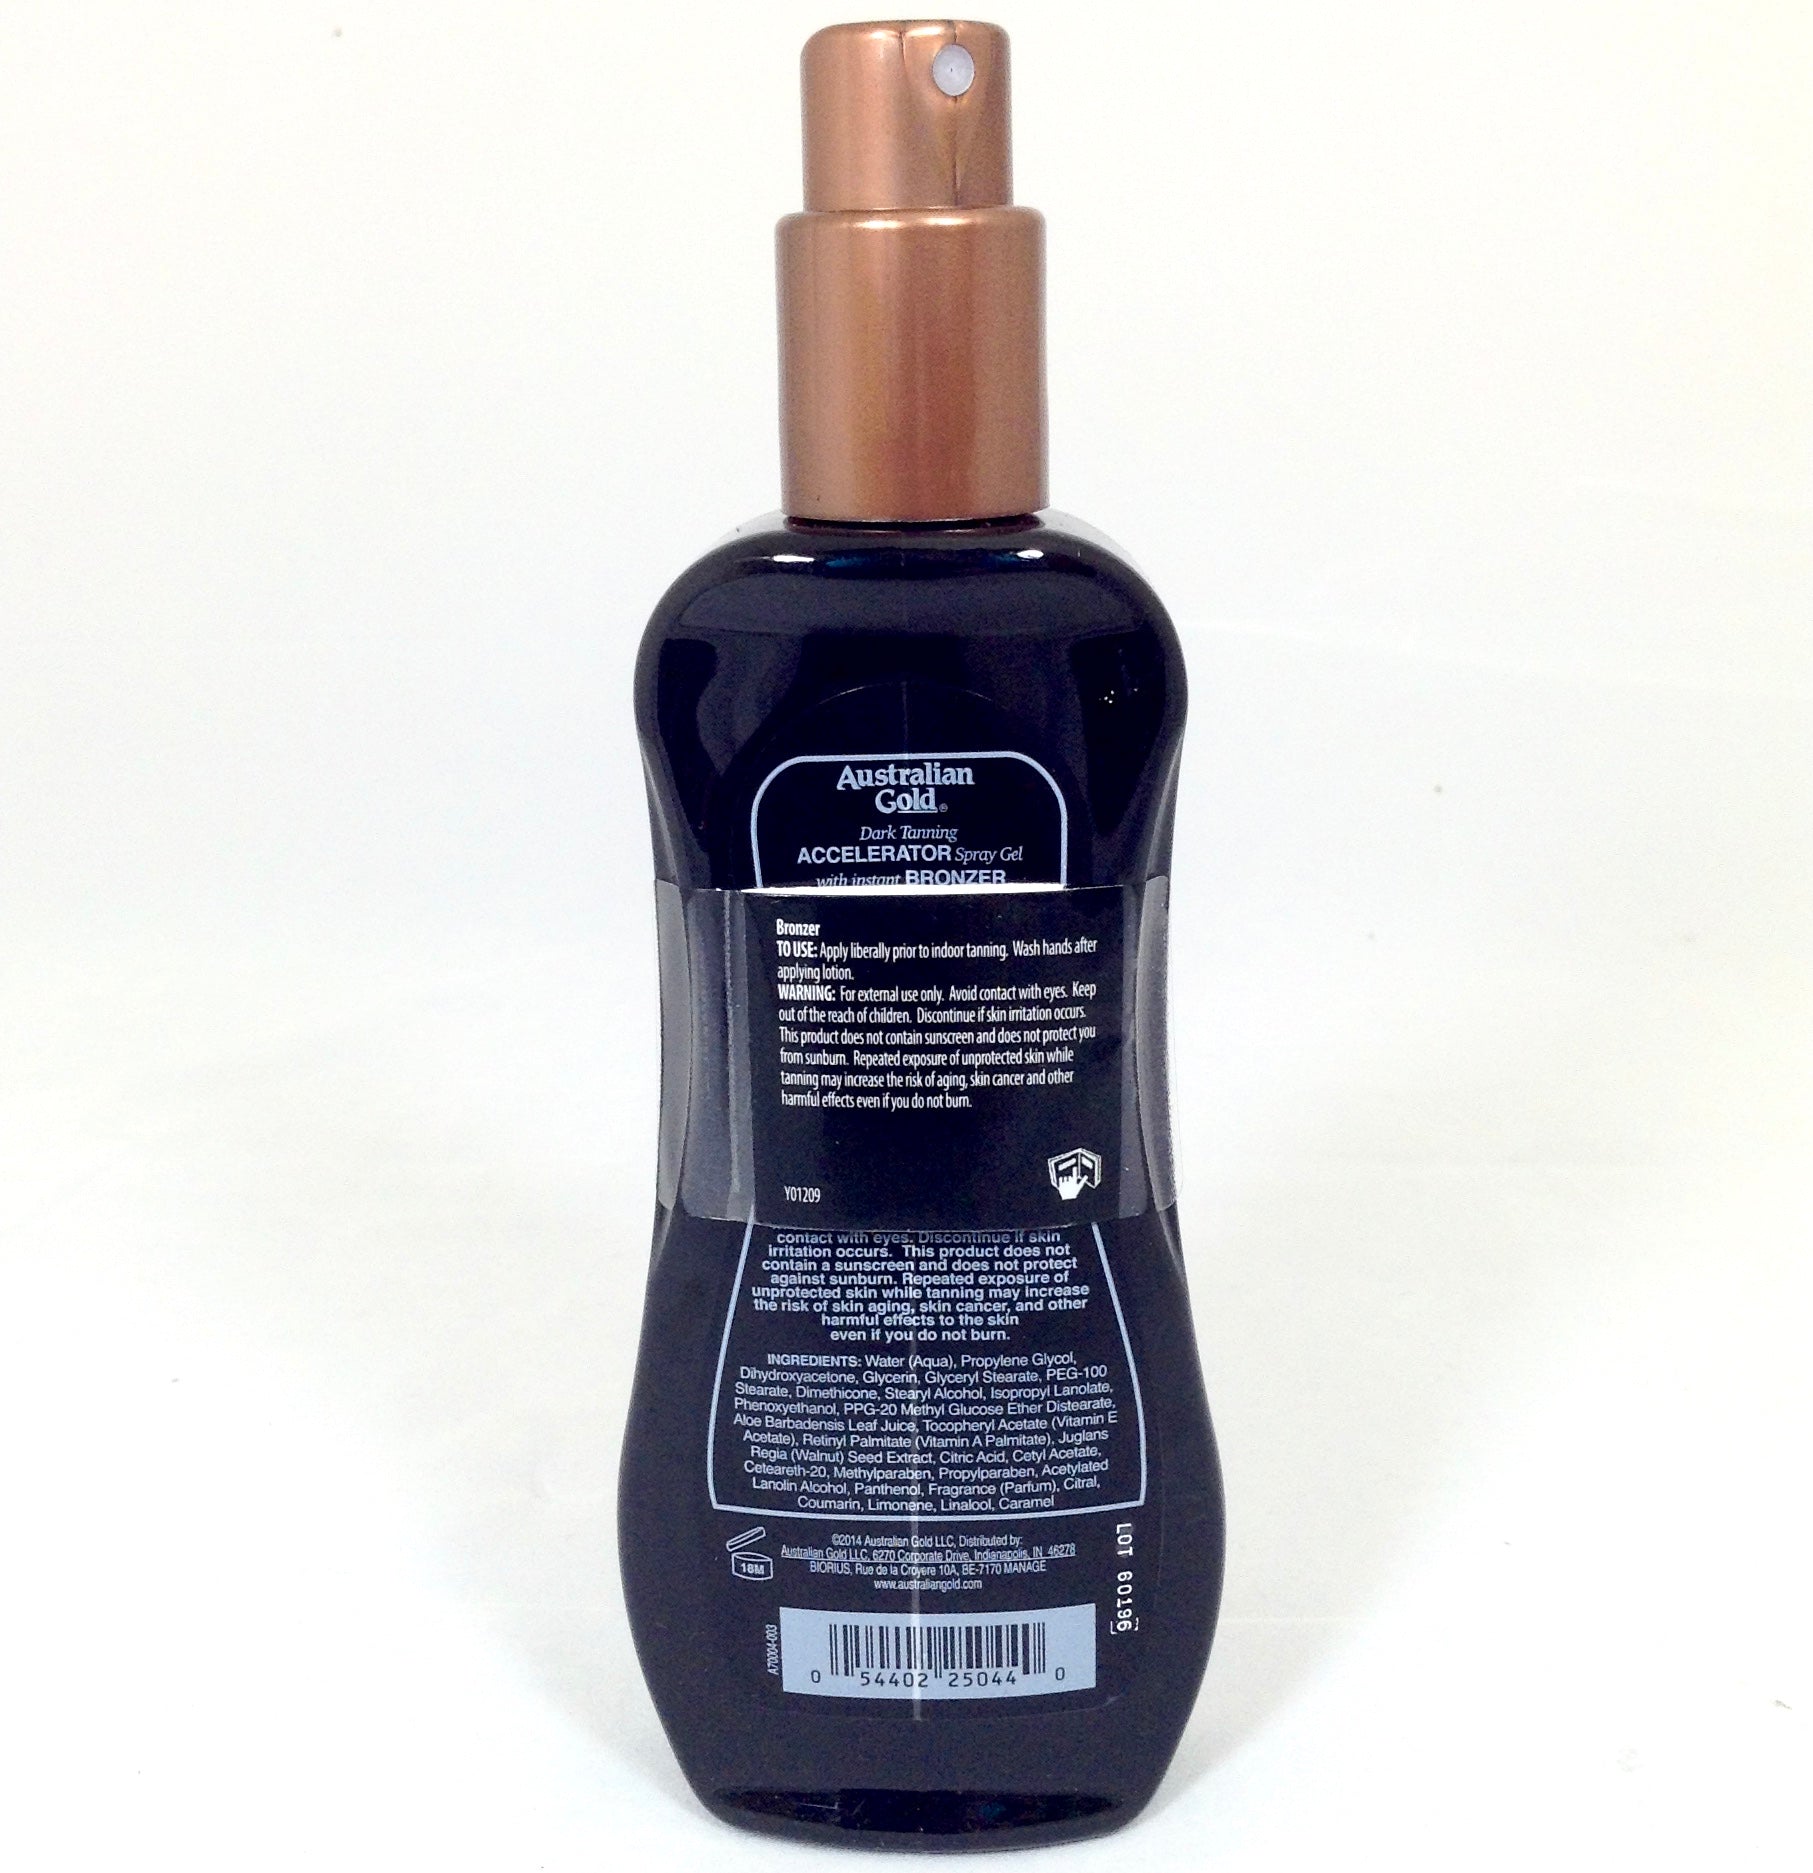 Australian Gold Dark Tanning Accelerator Spray With DHA Bronzer